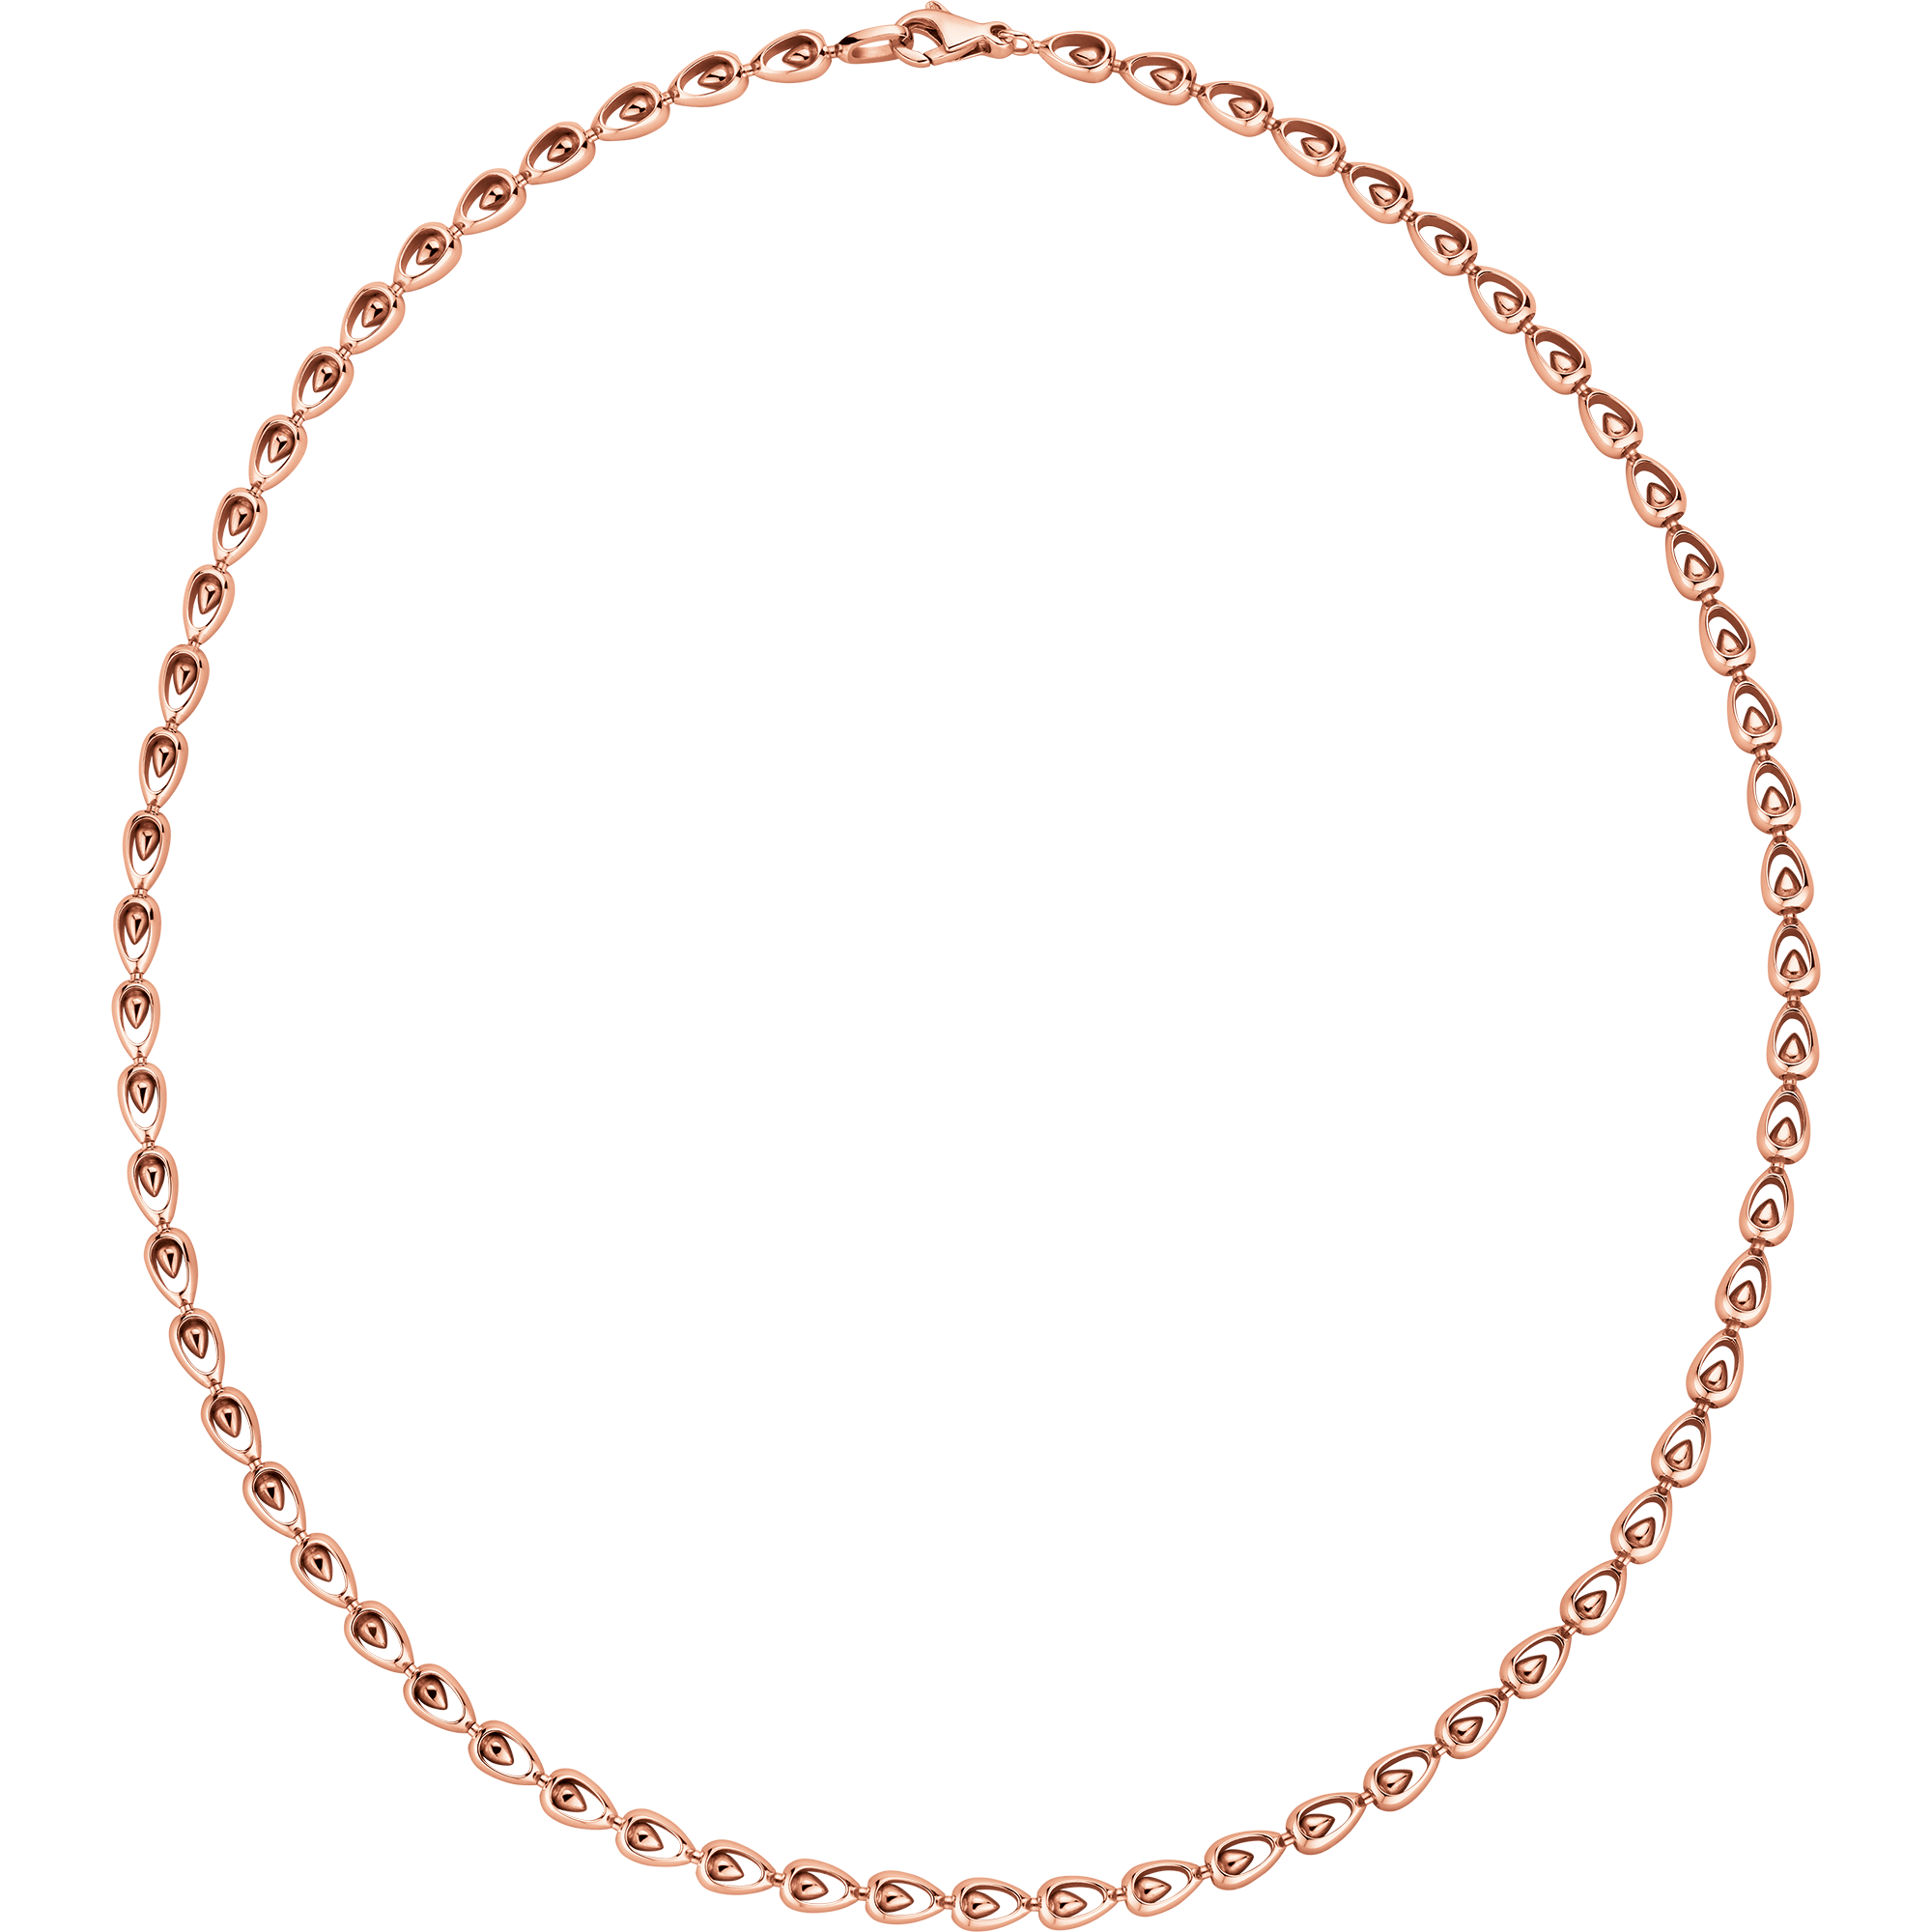 Omega Dewdrop Colar, Ouro rosa de 18K - N602BG0000105